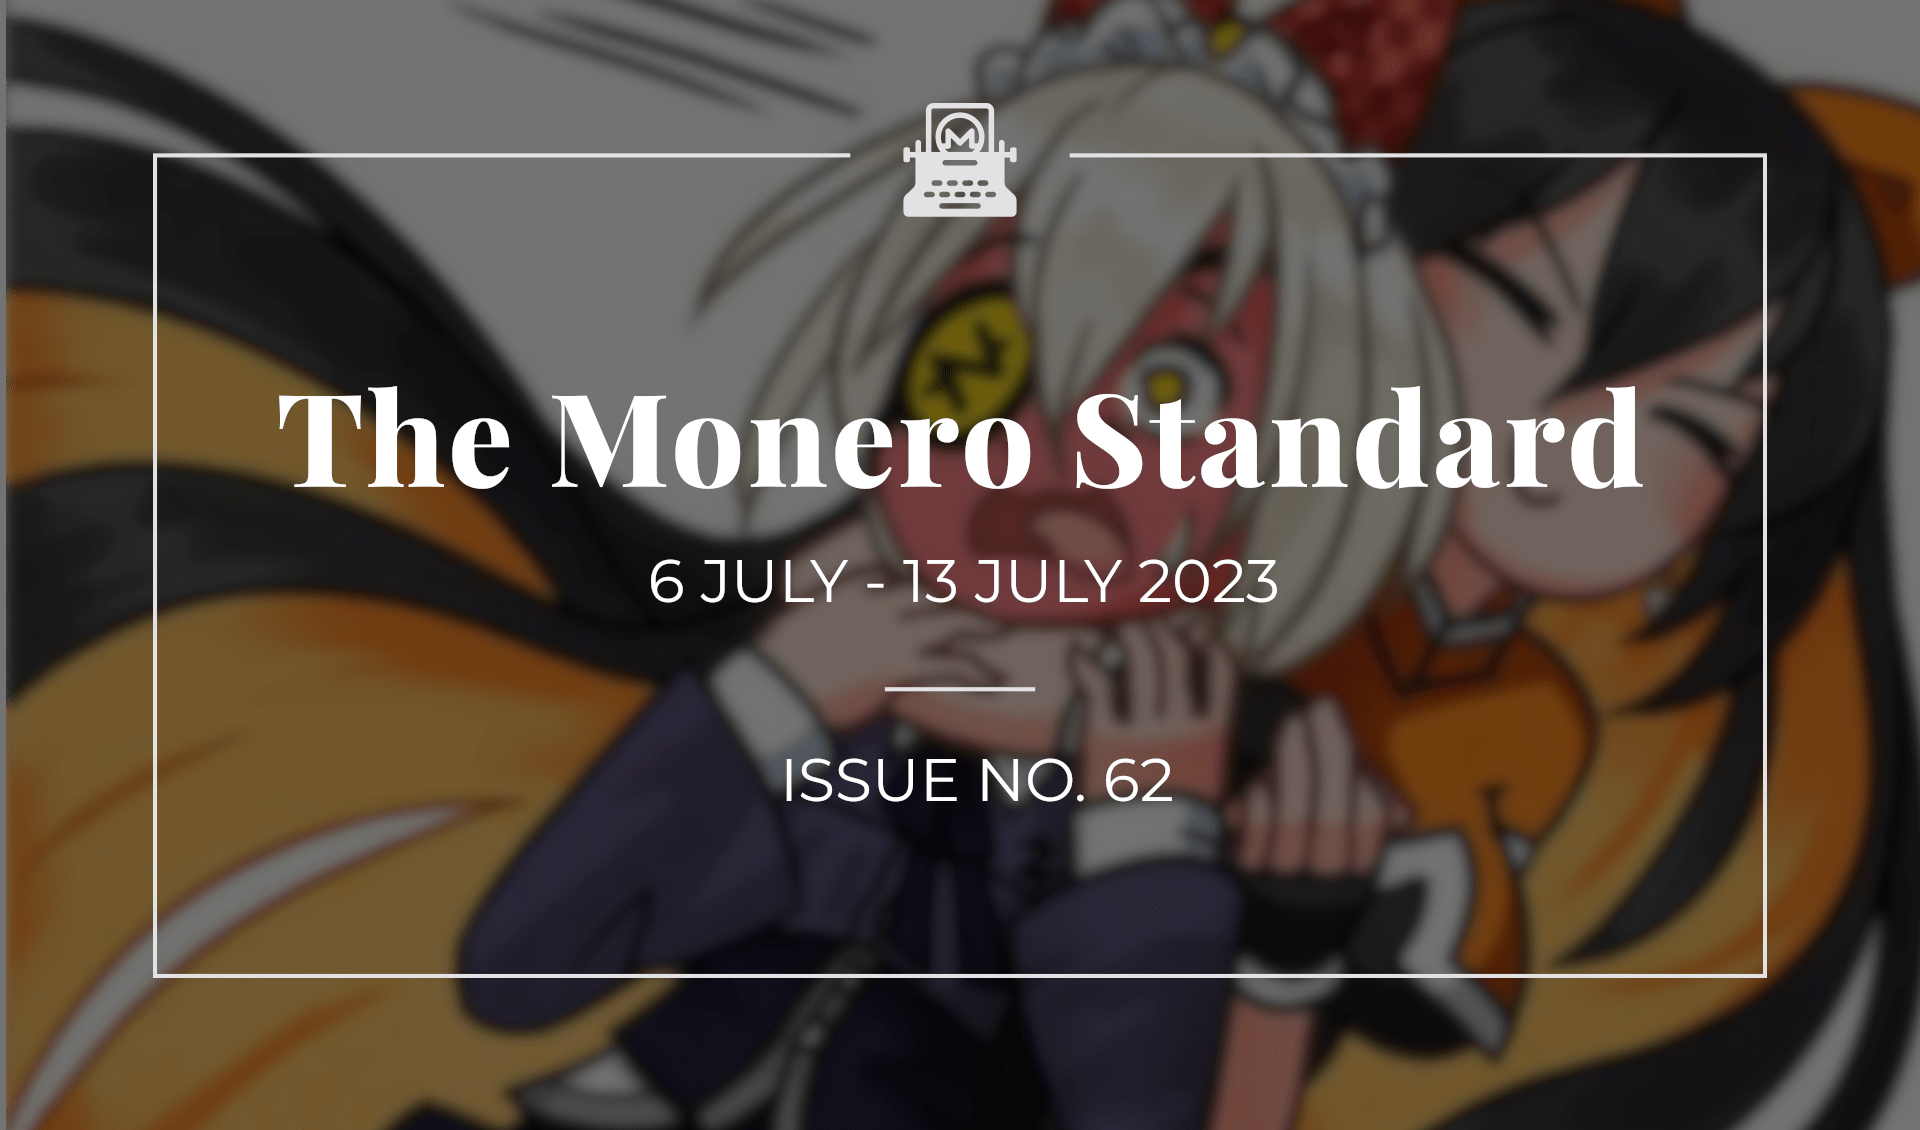 The Monero Standard #62: 6 July 2023 - 13 July 2023